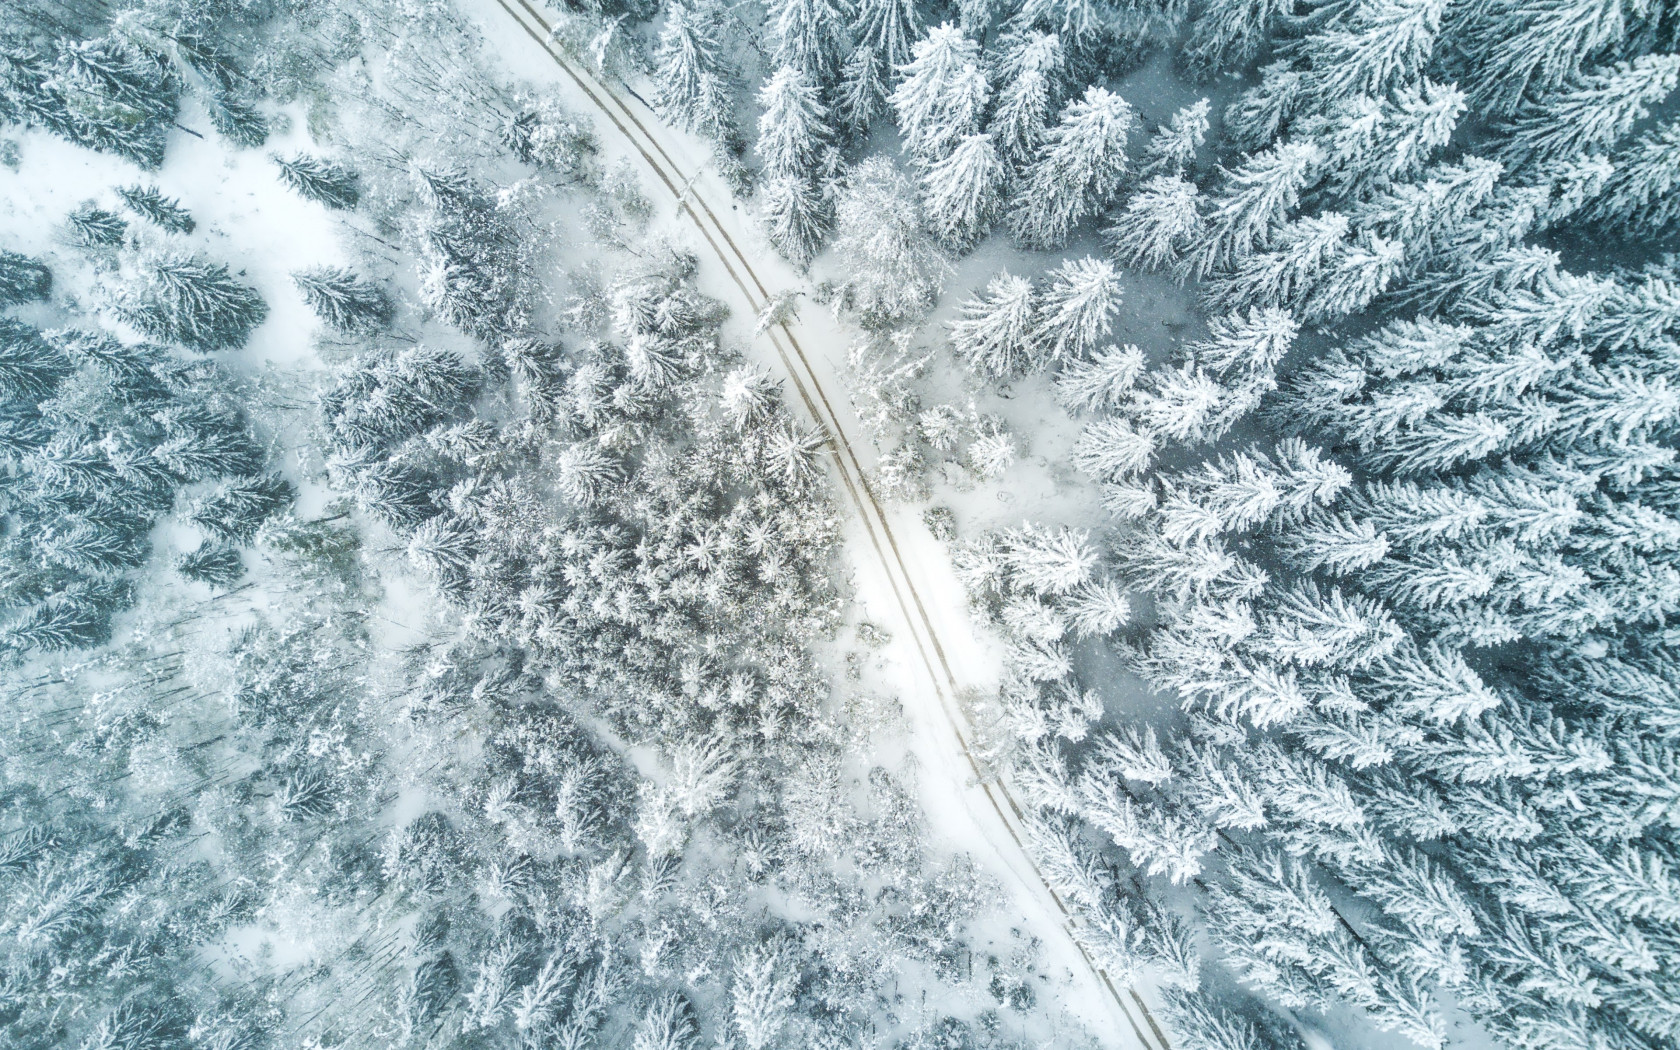 Download wallpaper: Aerial Winter landscape 1680x1050